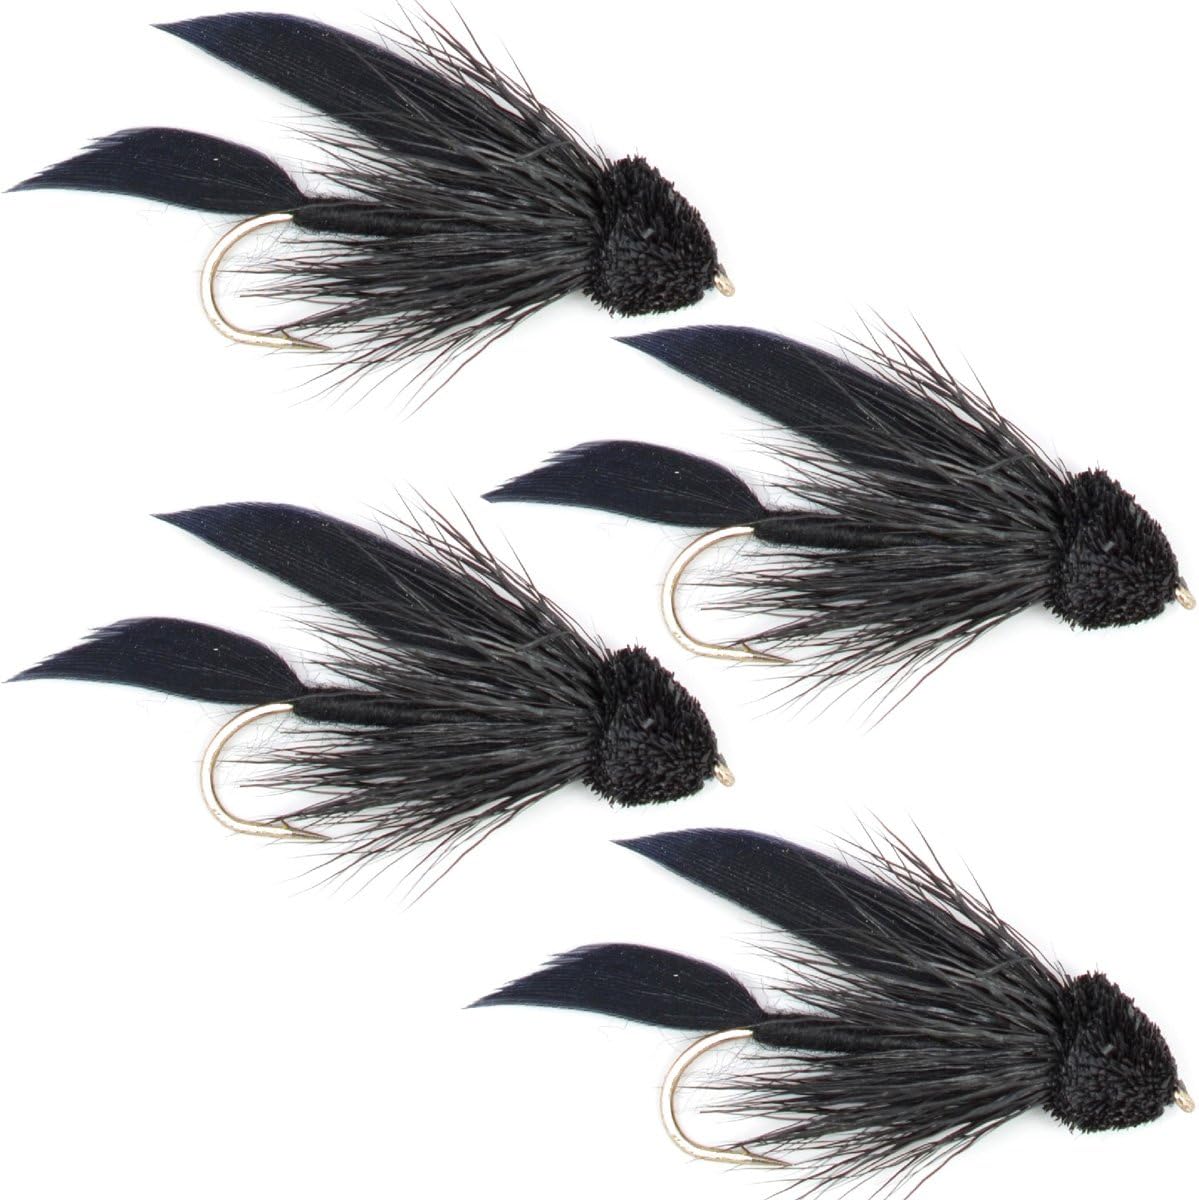 Black Muddler Minnow Fly Fishing Flies - Classic Streamers - Set of 4 Flies Hook Size 6